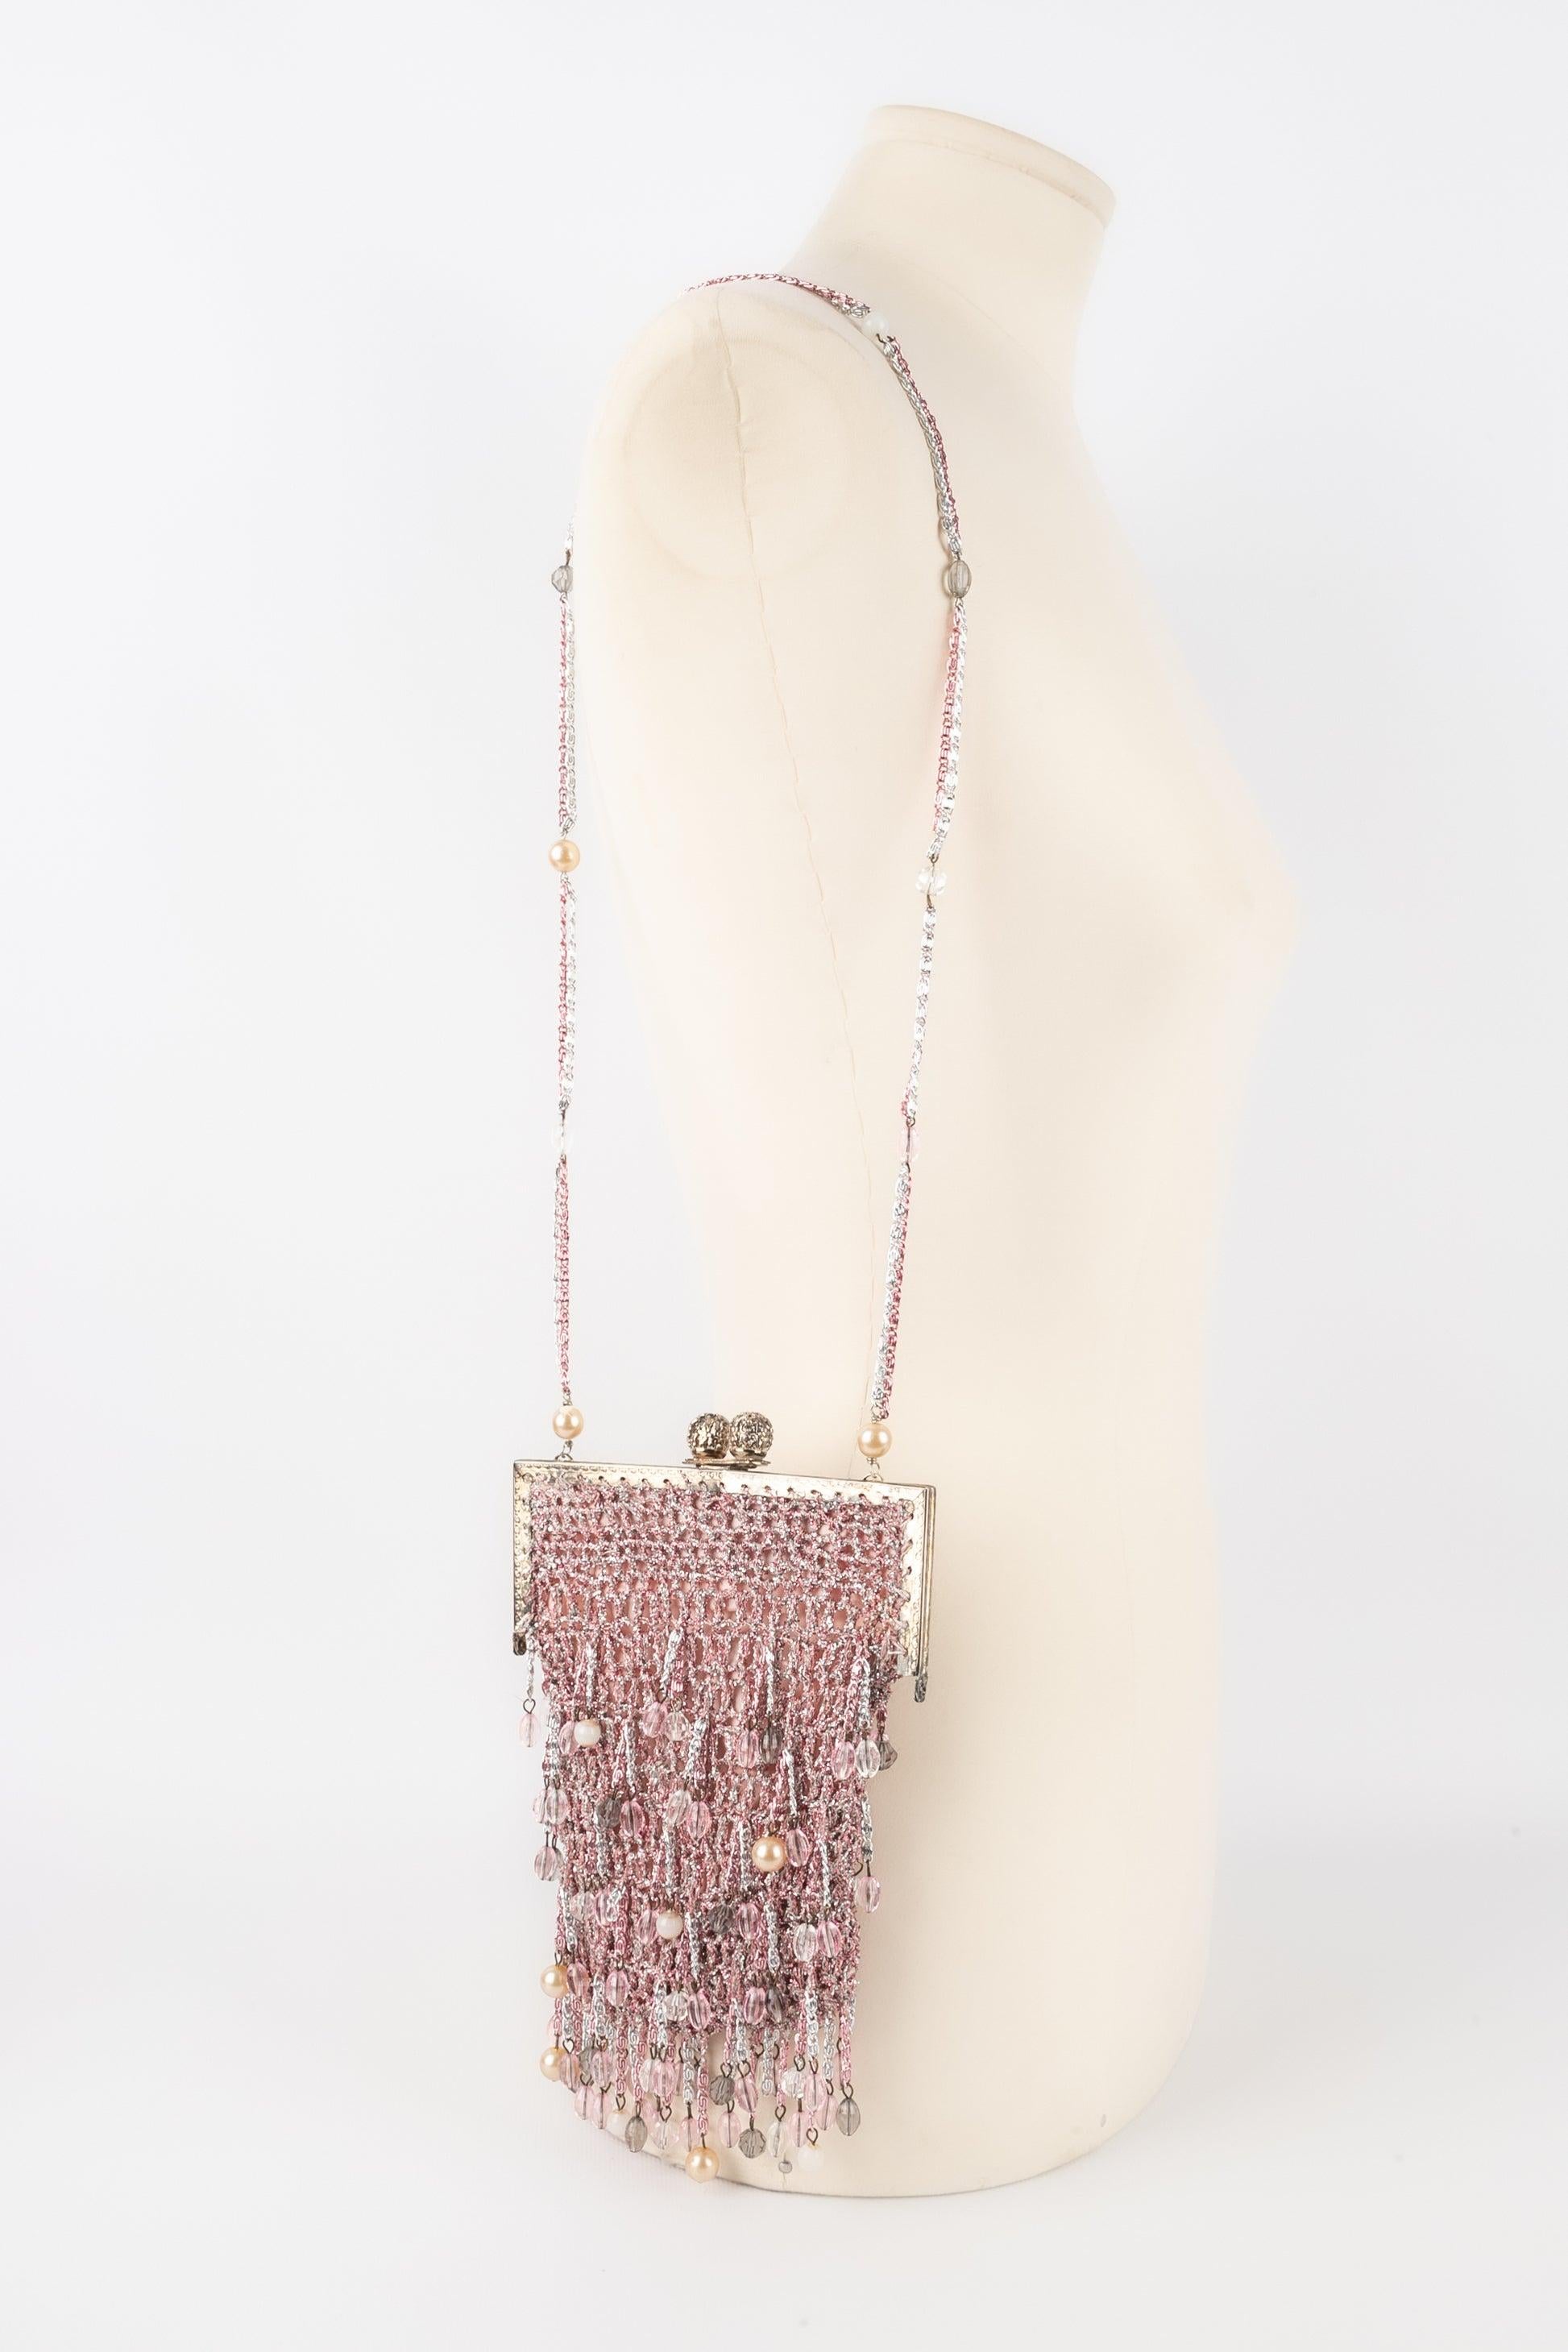 Loris Azzaro Pink and Silvery Lurew Mesh Handbag For Sale 2